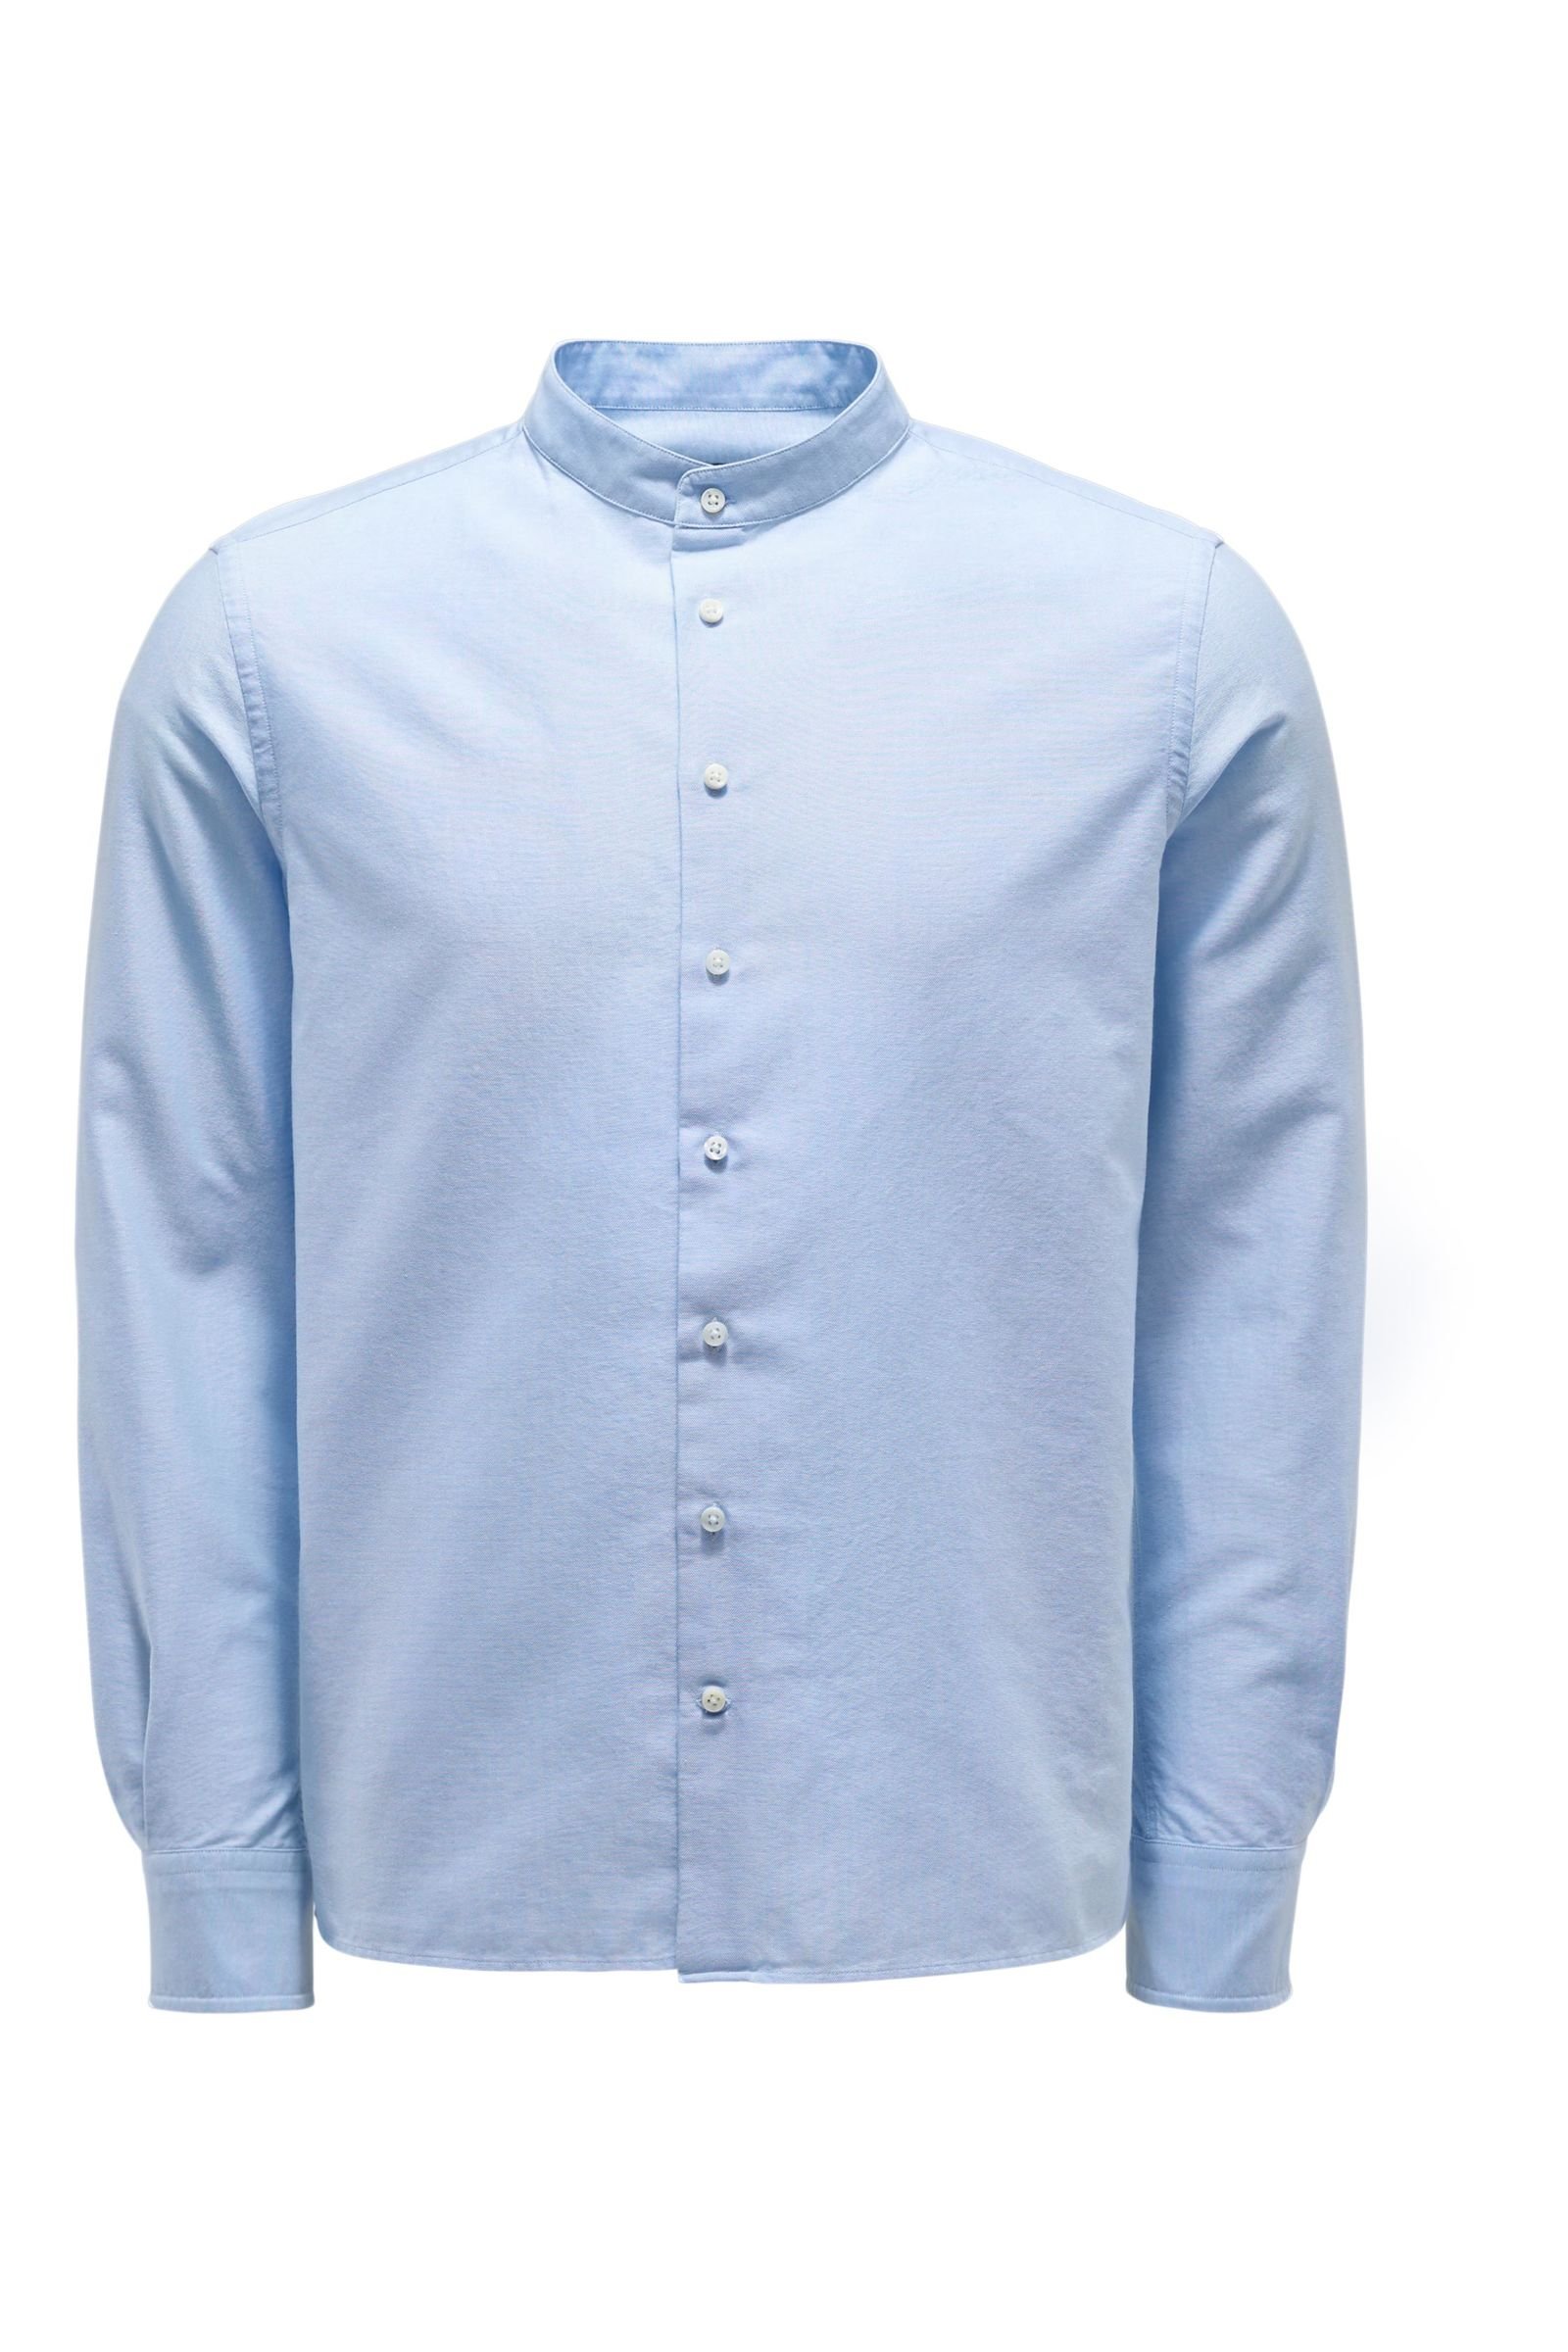 Oxford shirt granddad collar light blue